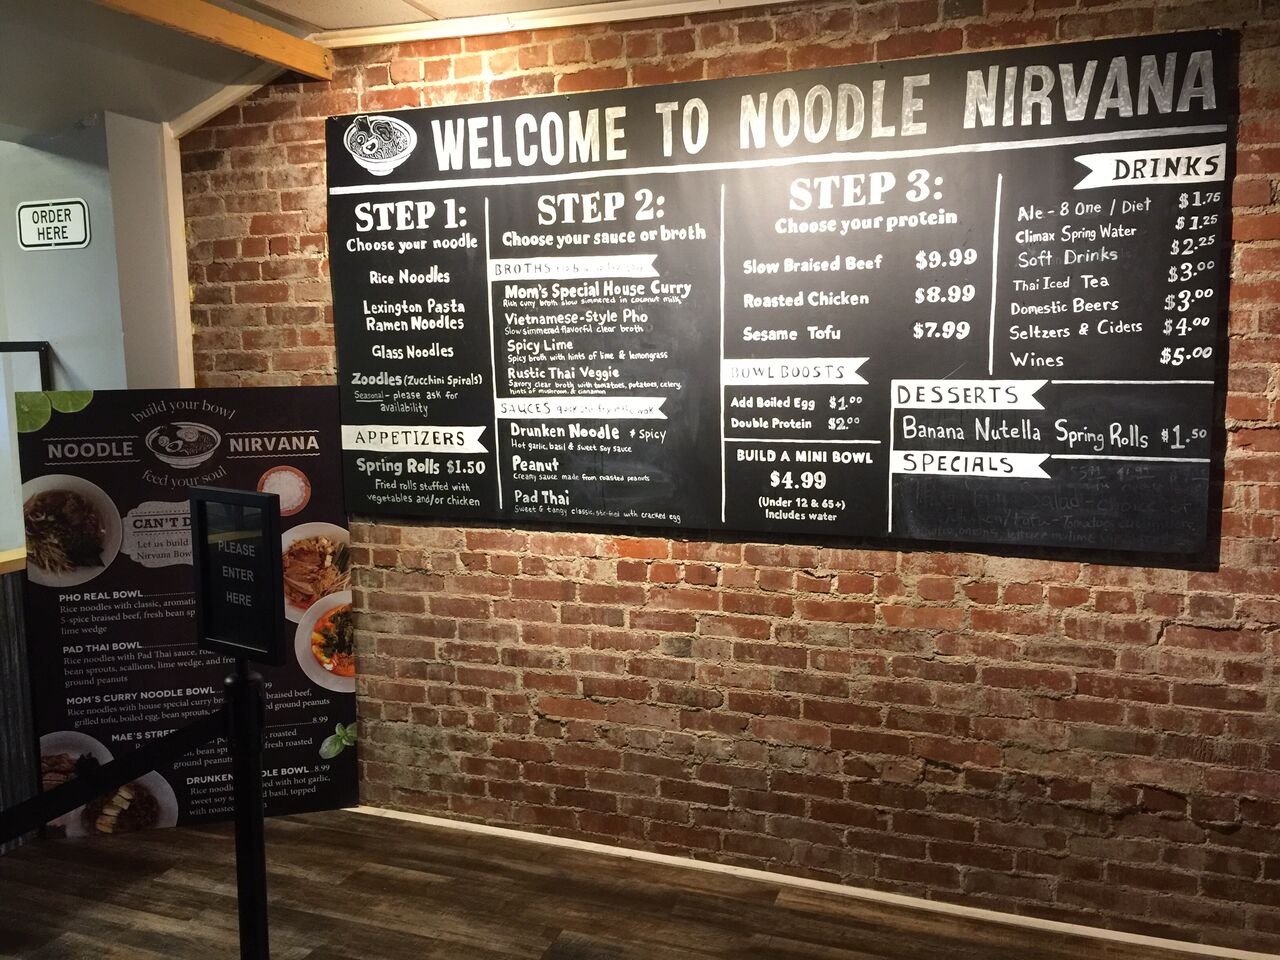 A photo of Noodle Nirvana